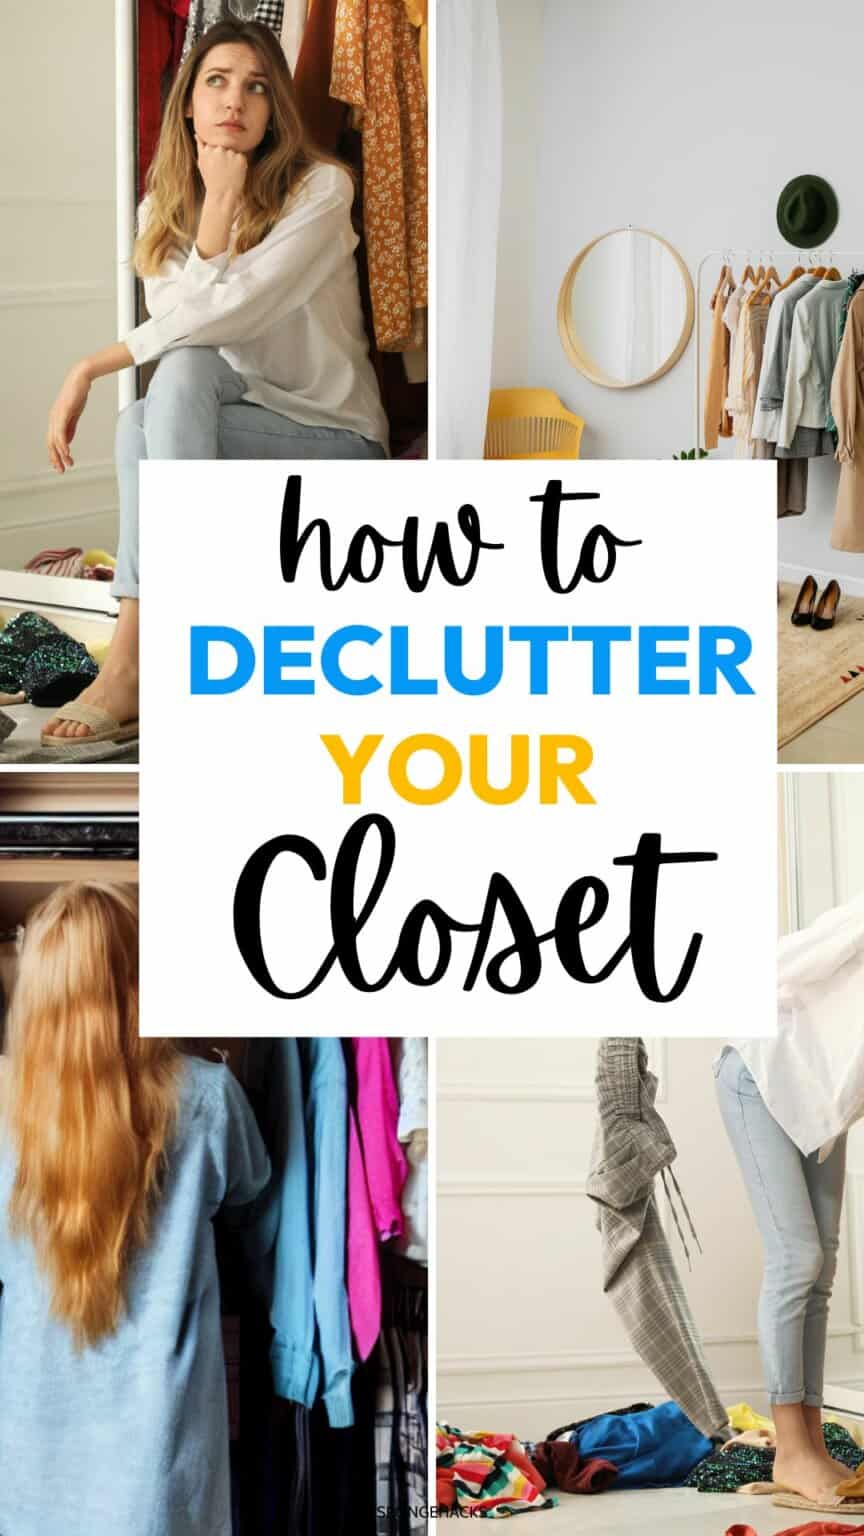 How to Declutter Your Closet (& Make Room for More) - Sponge Hacks